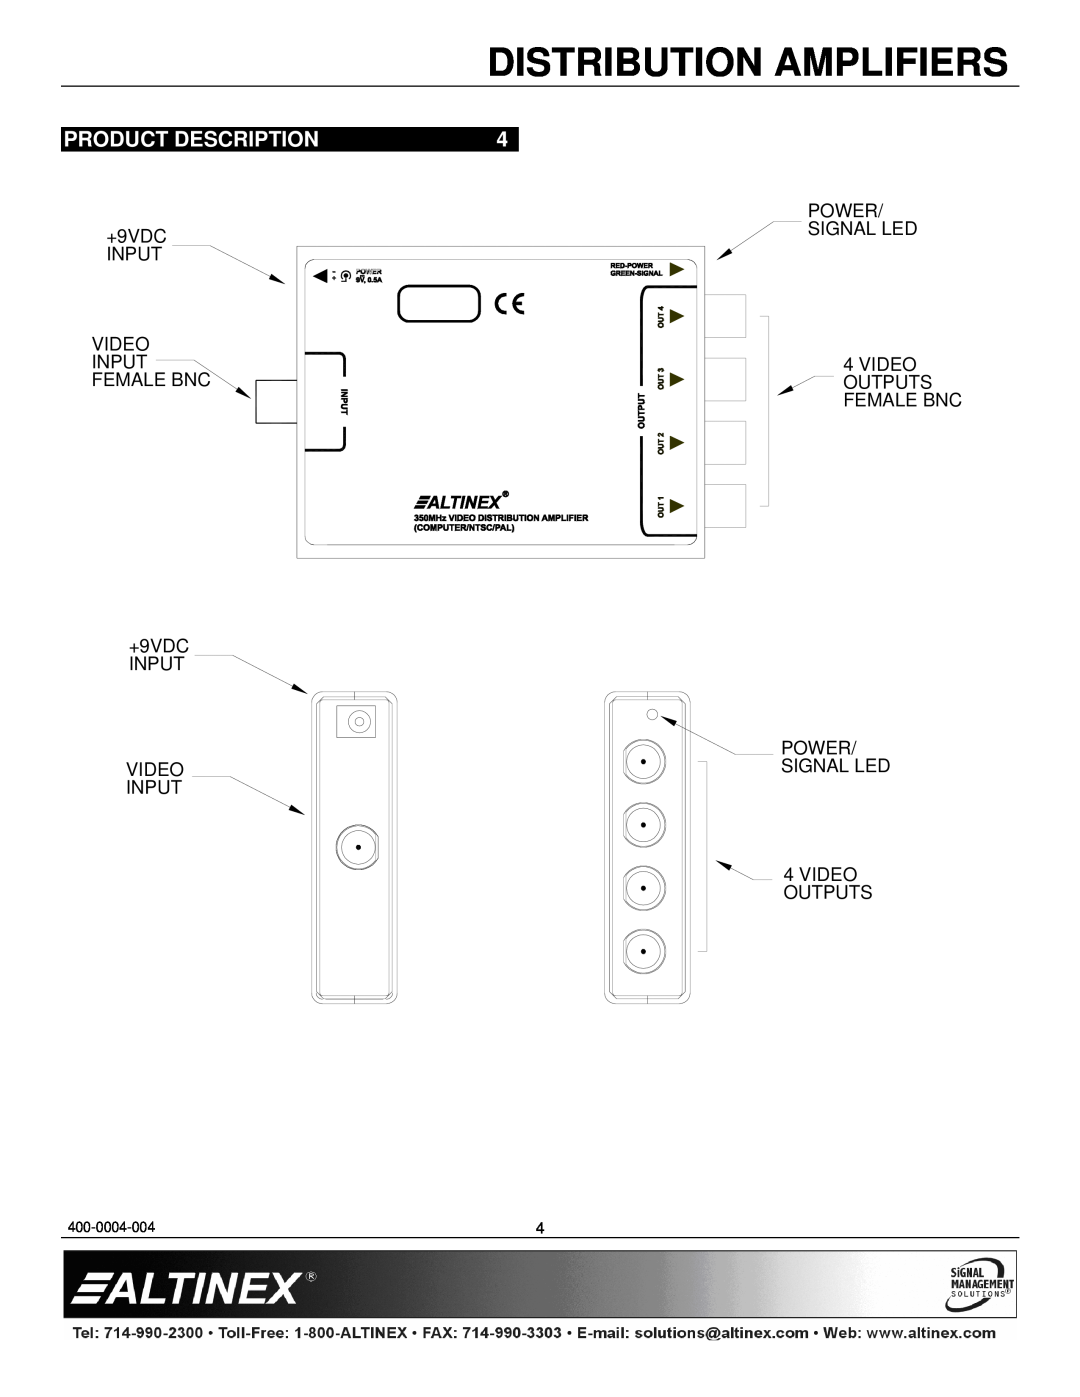 Altinex DA1804NT Product Description, Distribution Amplifiers, +9VDC INPUT VIDEO INPUT FEMALE BNC +9VDC INPUT, Video Input 